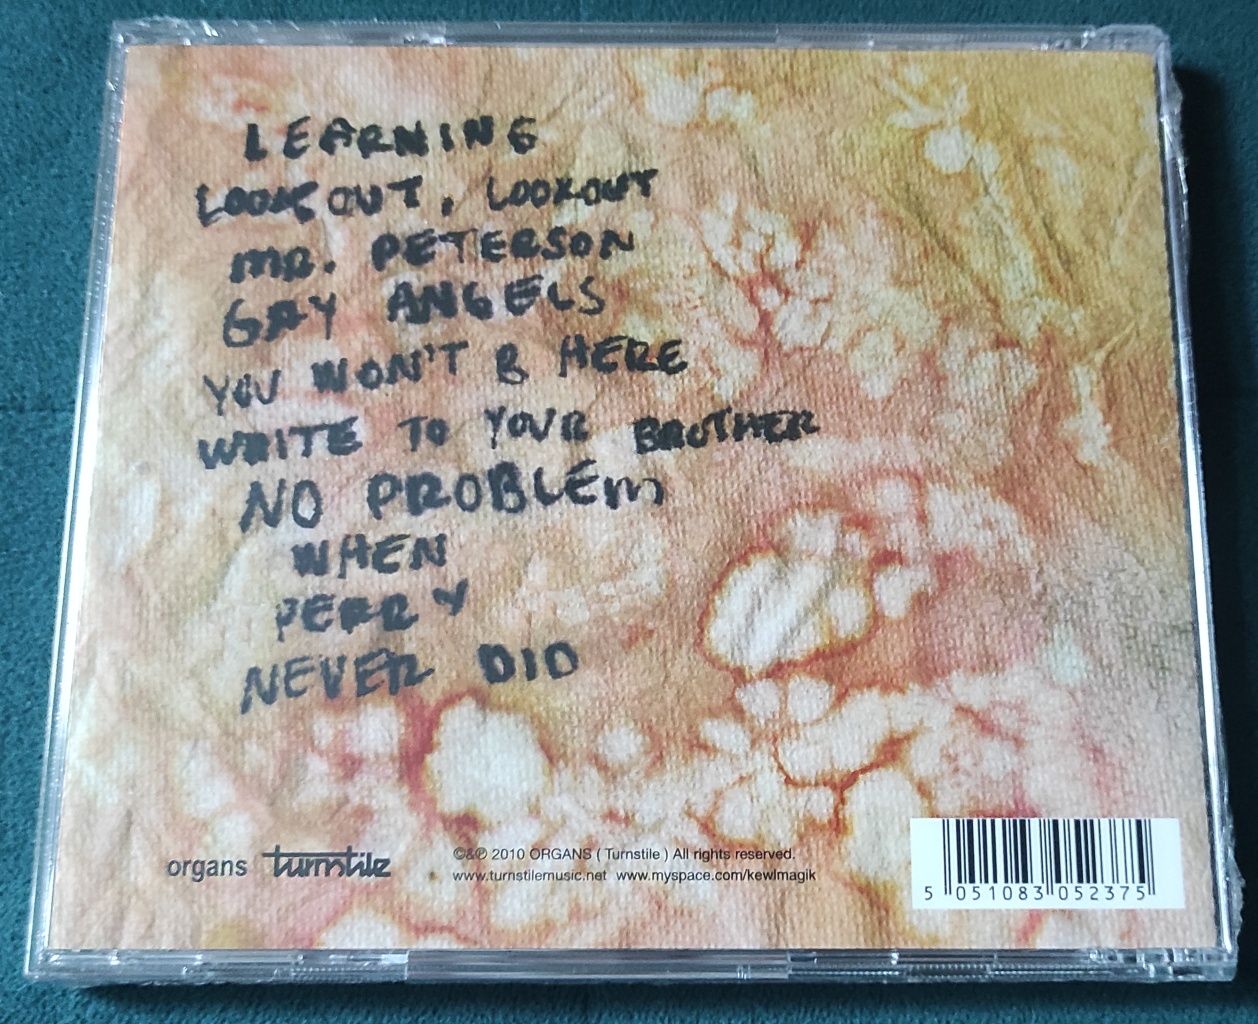 Perfume Genius - Learning - CD Novo